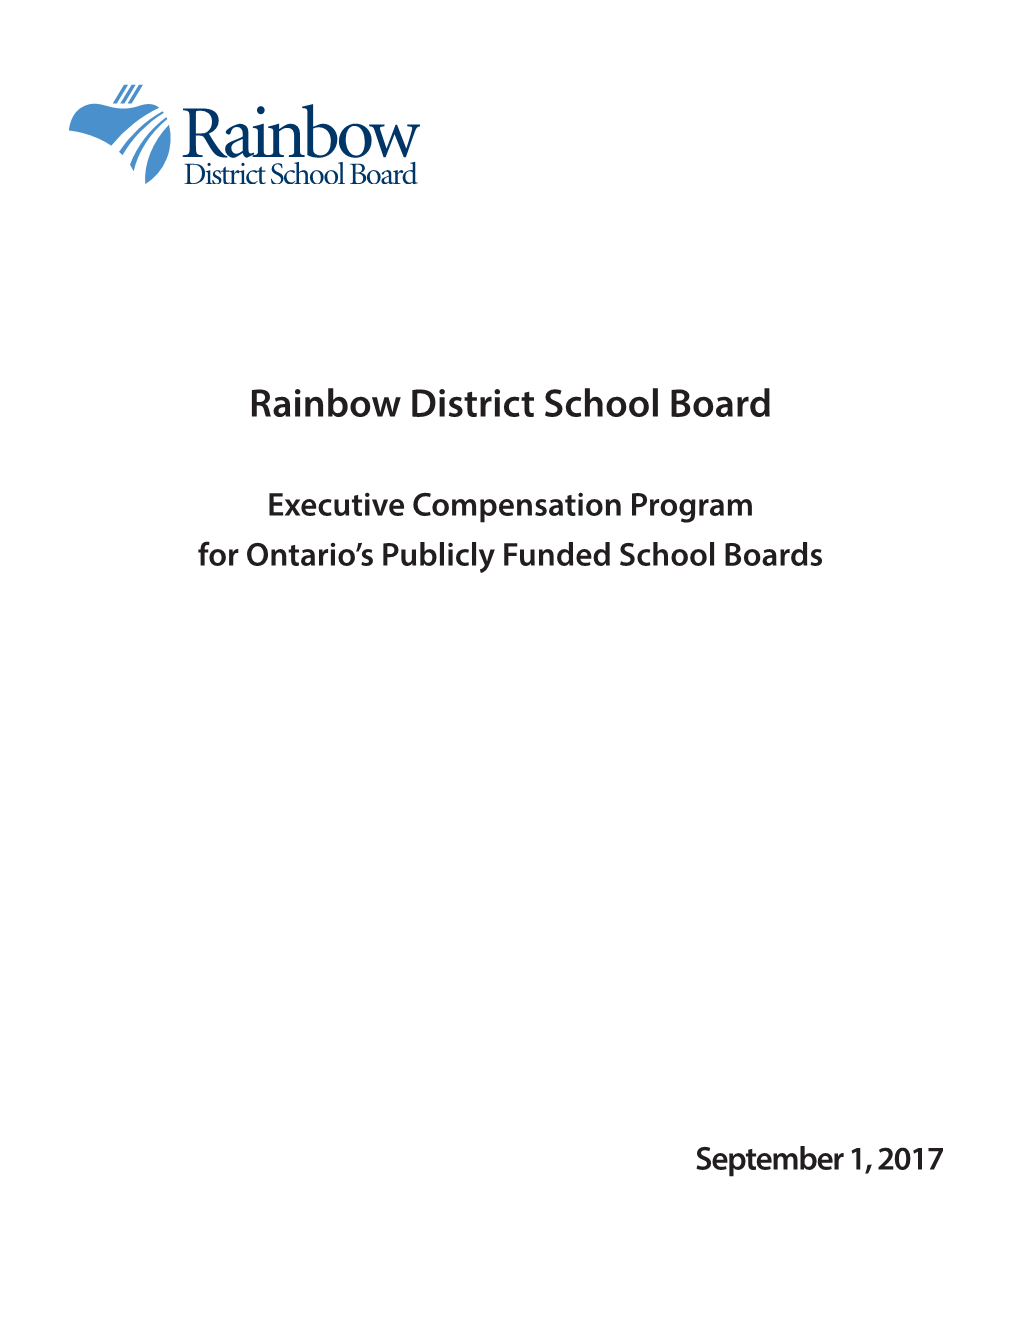 Rainbow DSB Executive Compensation Program Nov 17